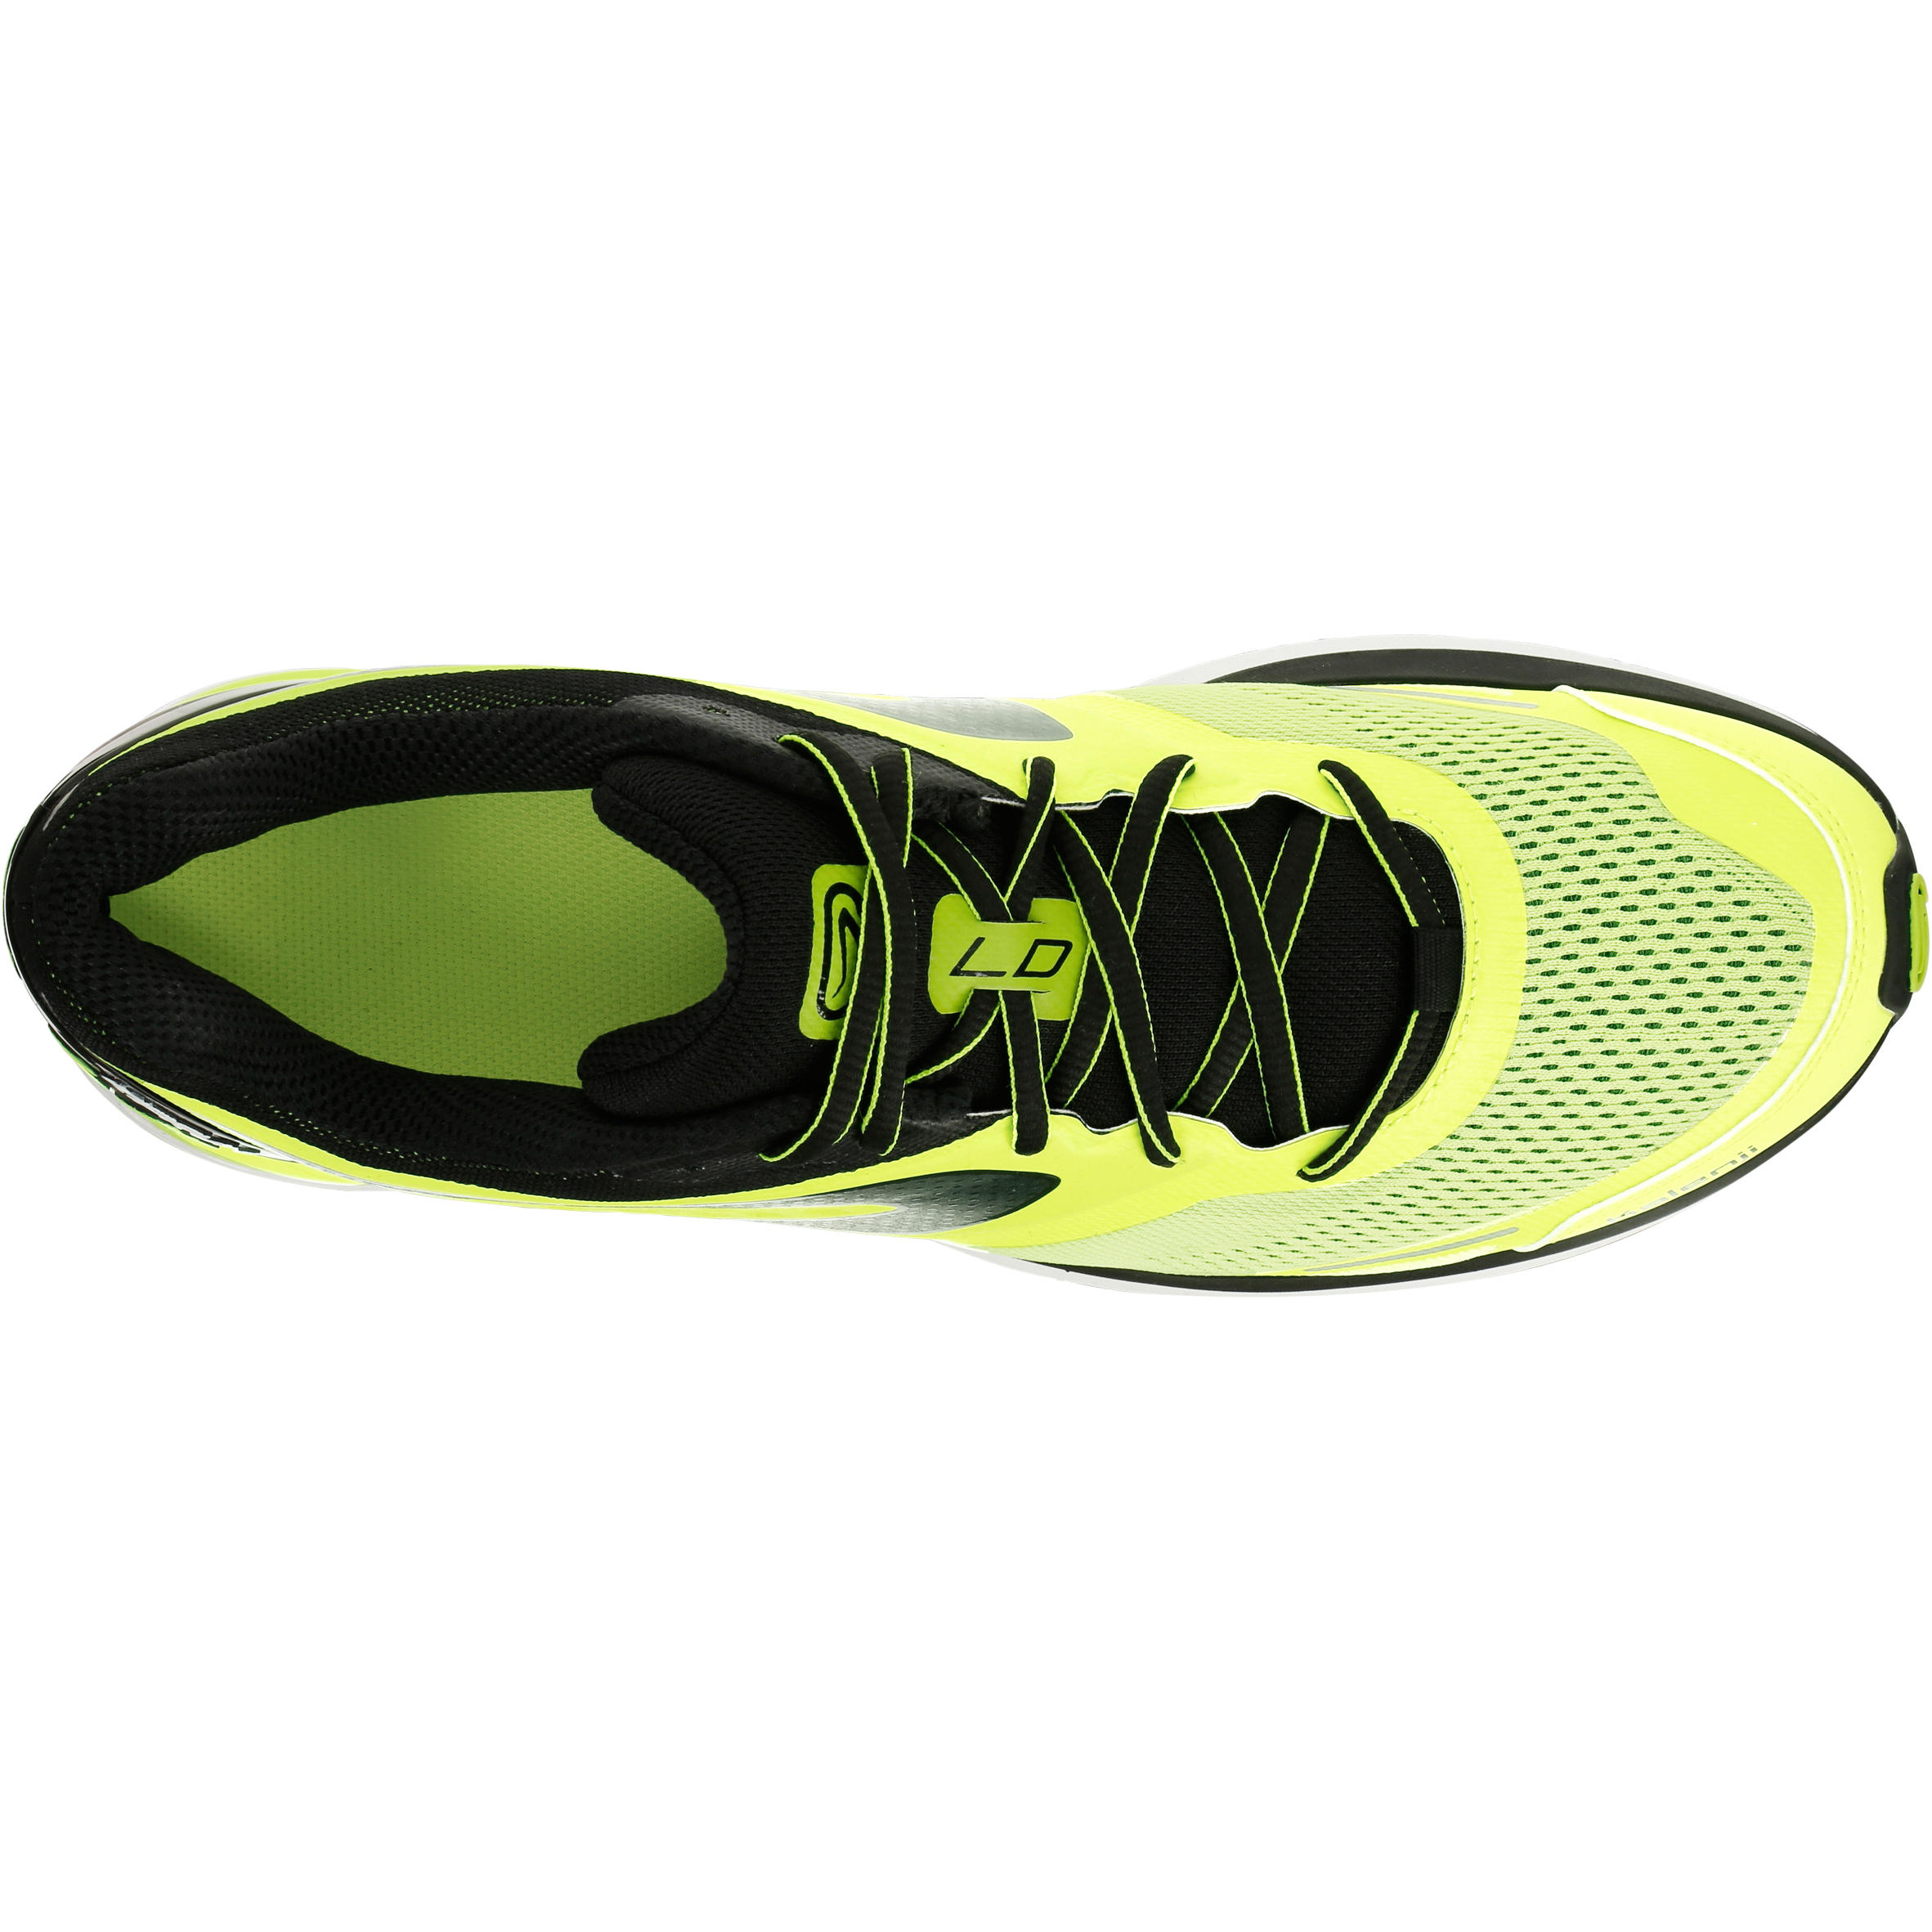 Kiprun SD Men's Running Shoes - Yellow 6/14